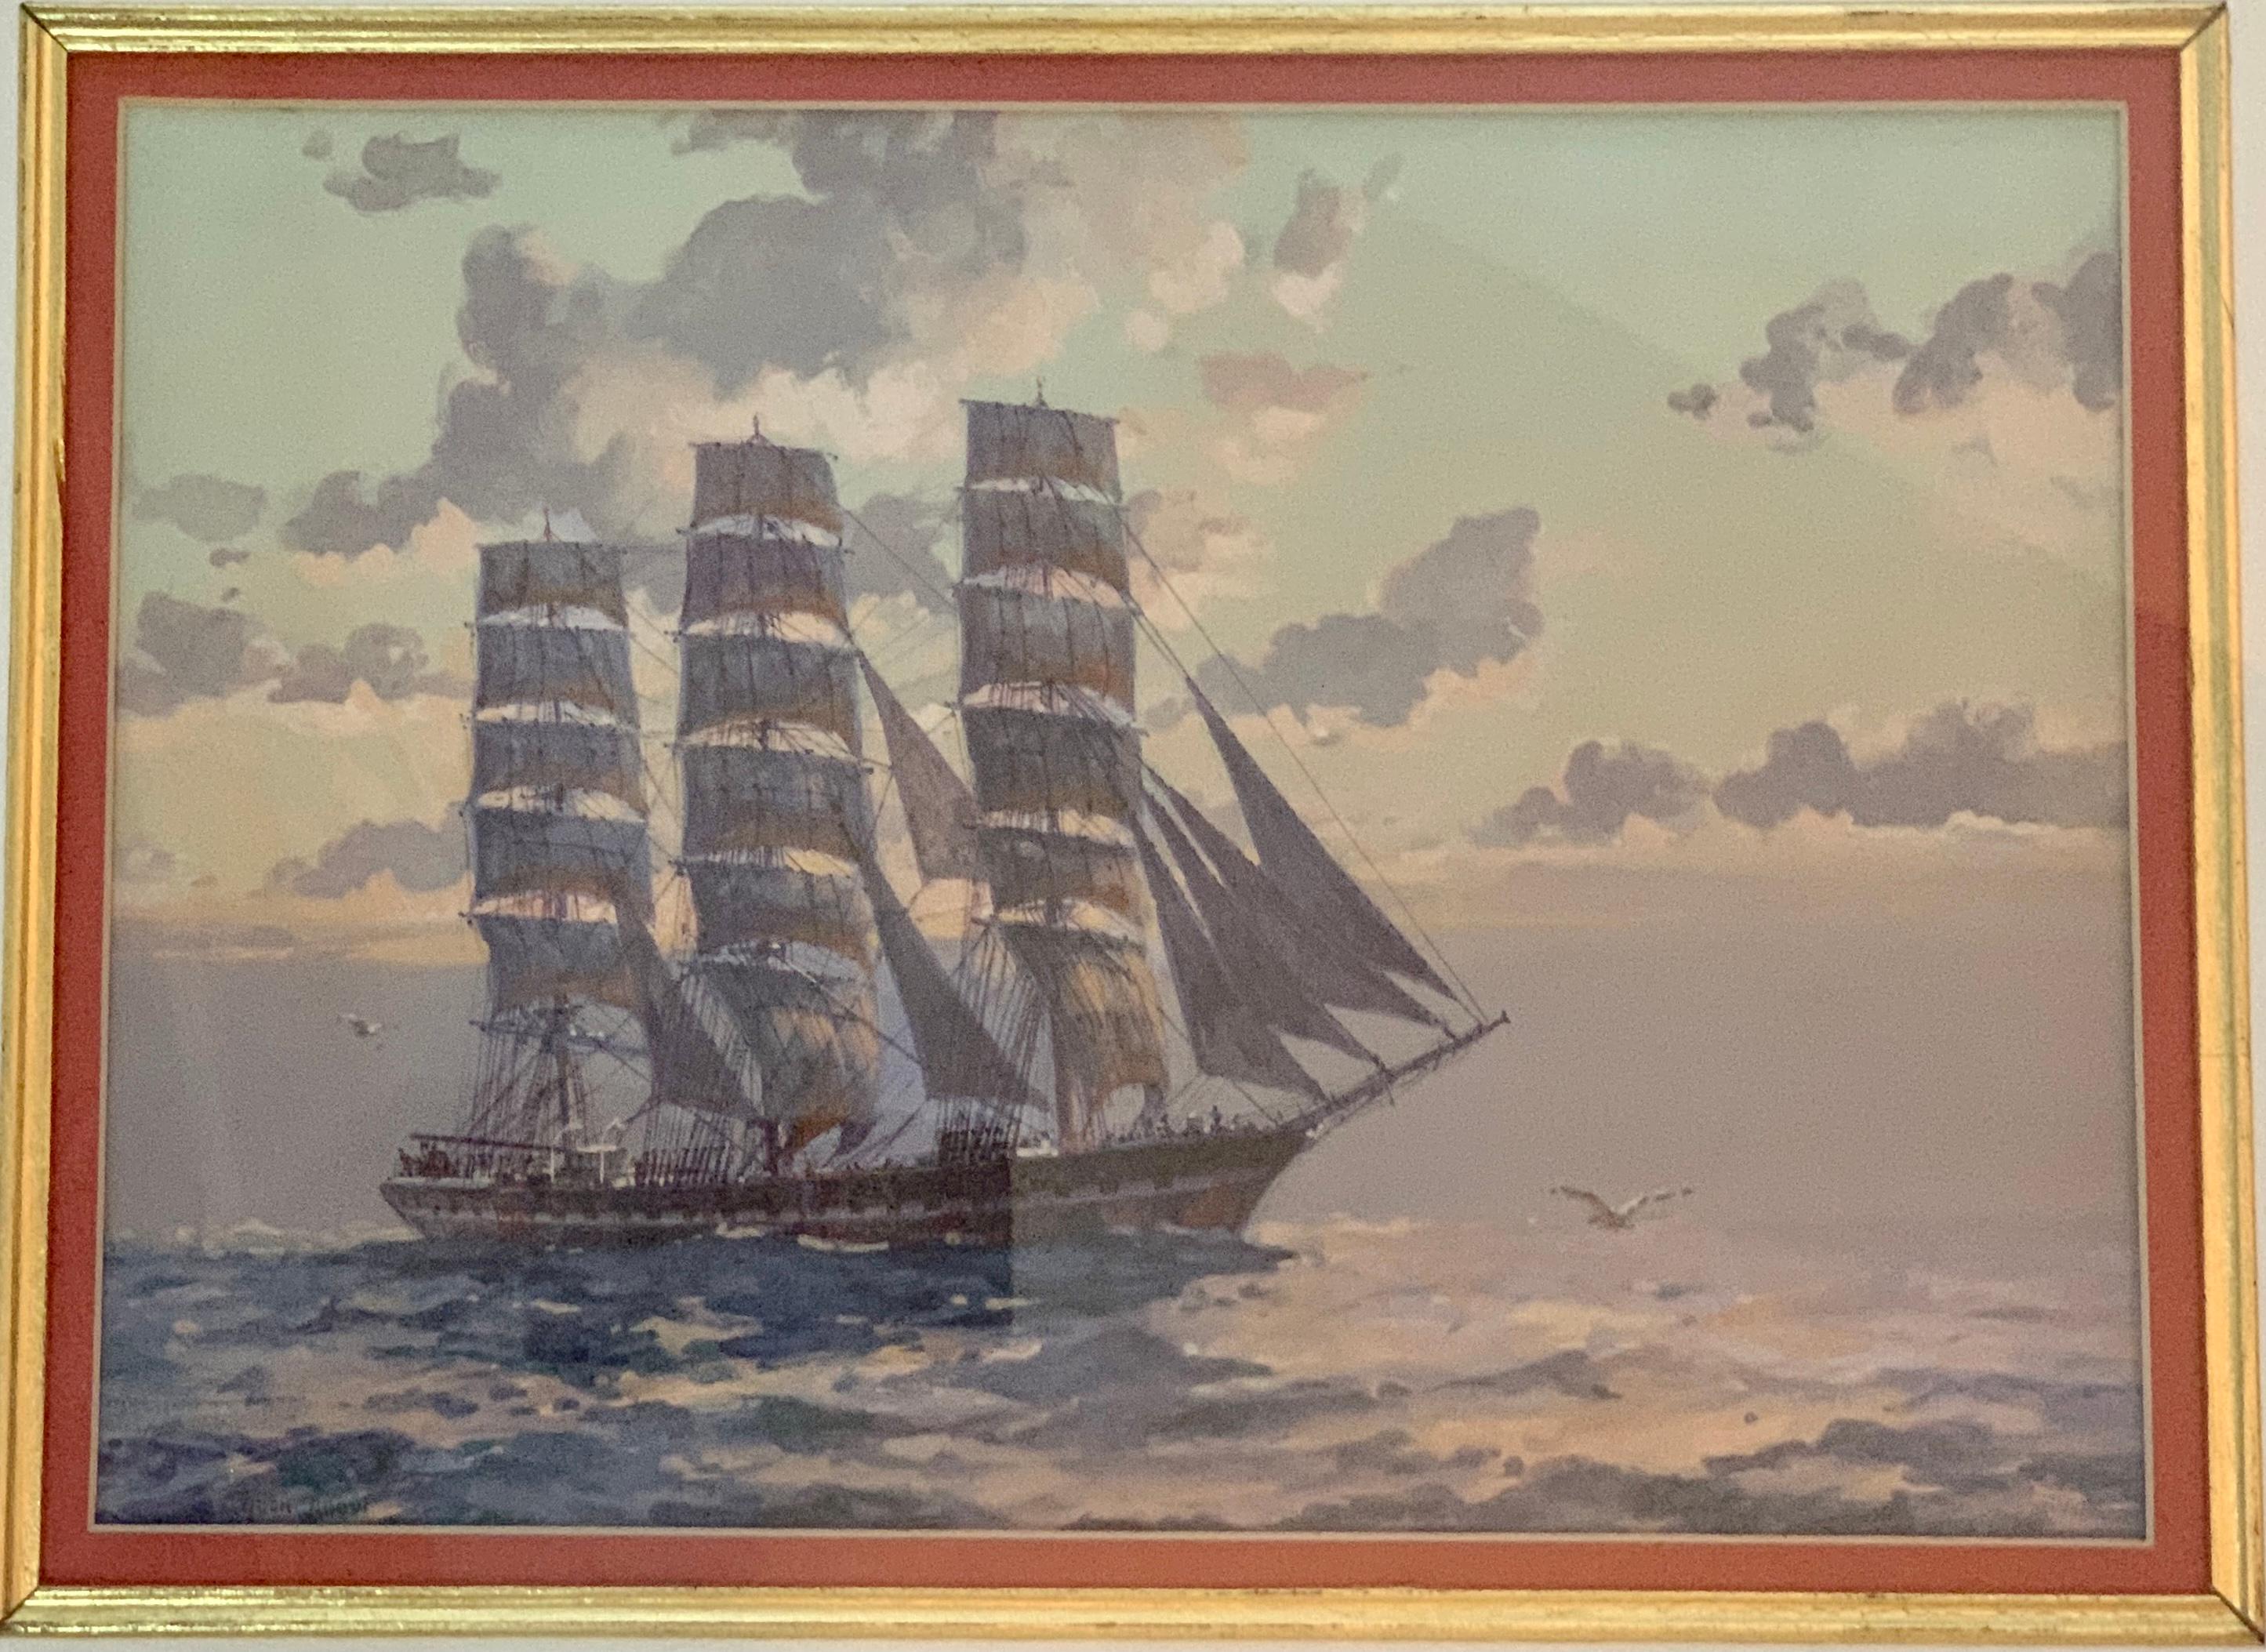 English tea Clipper ship in full sail at sea with the Sun rising - Art by John Allan